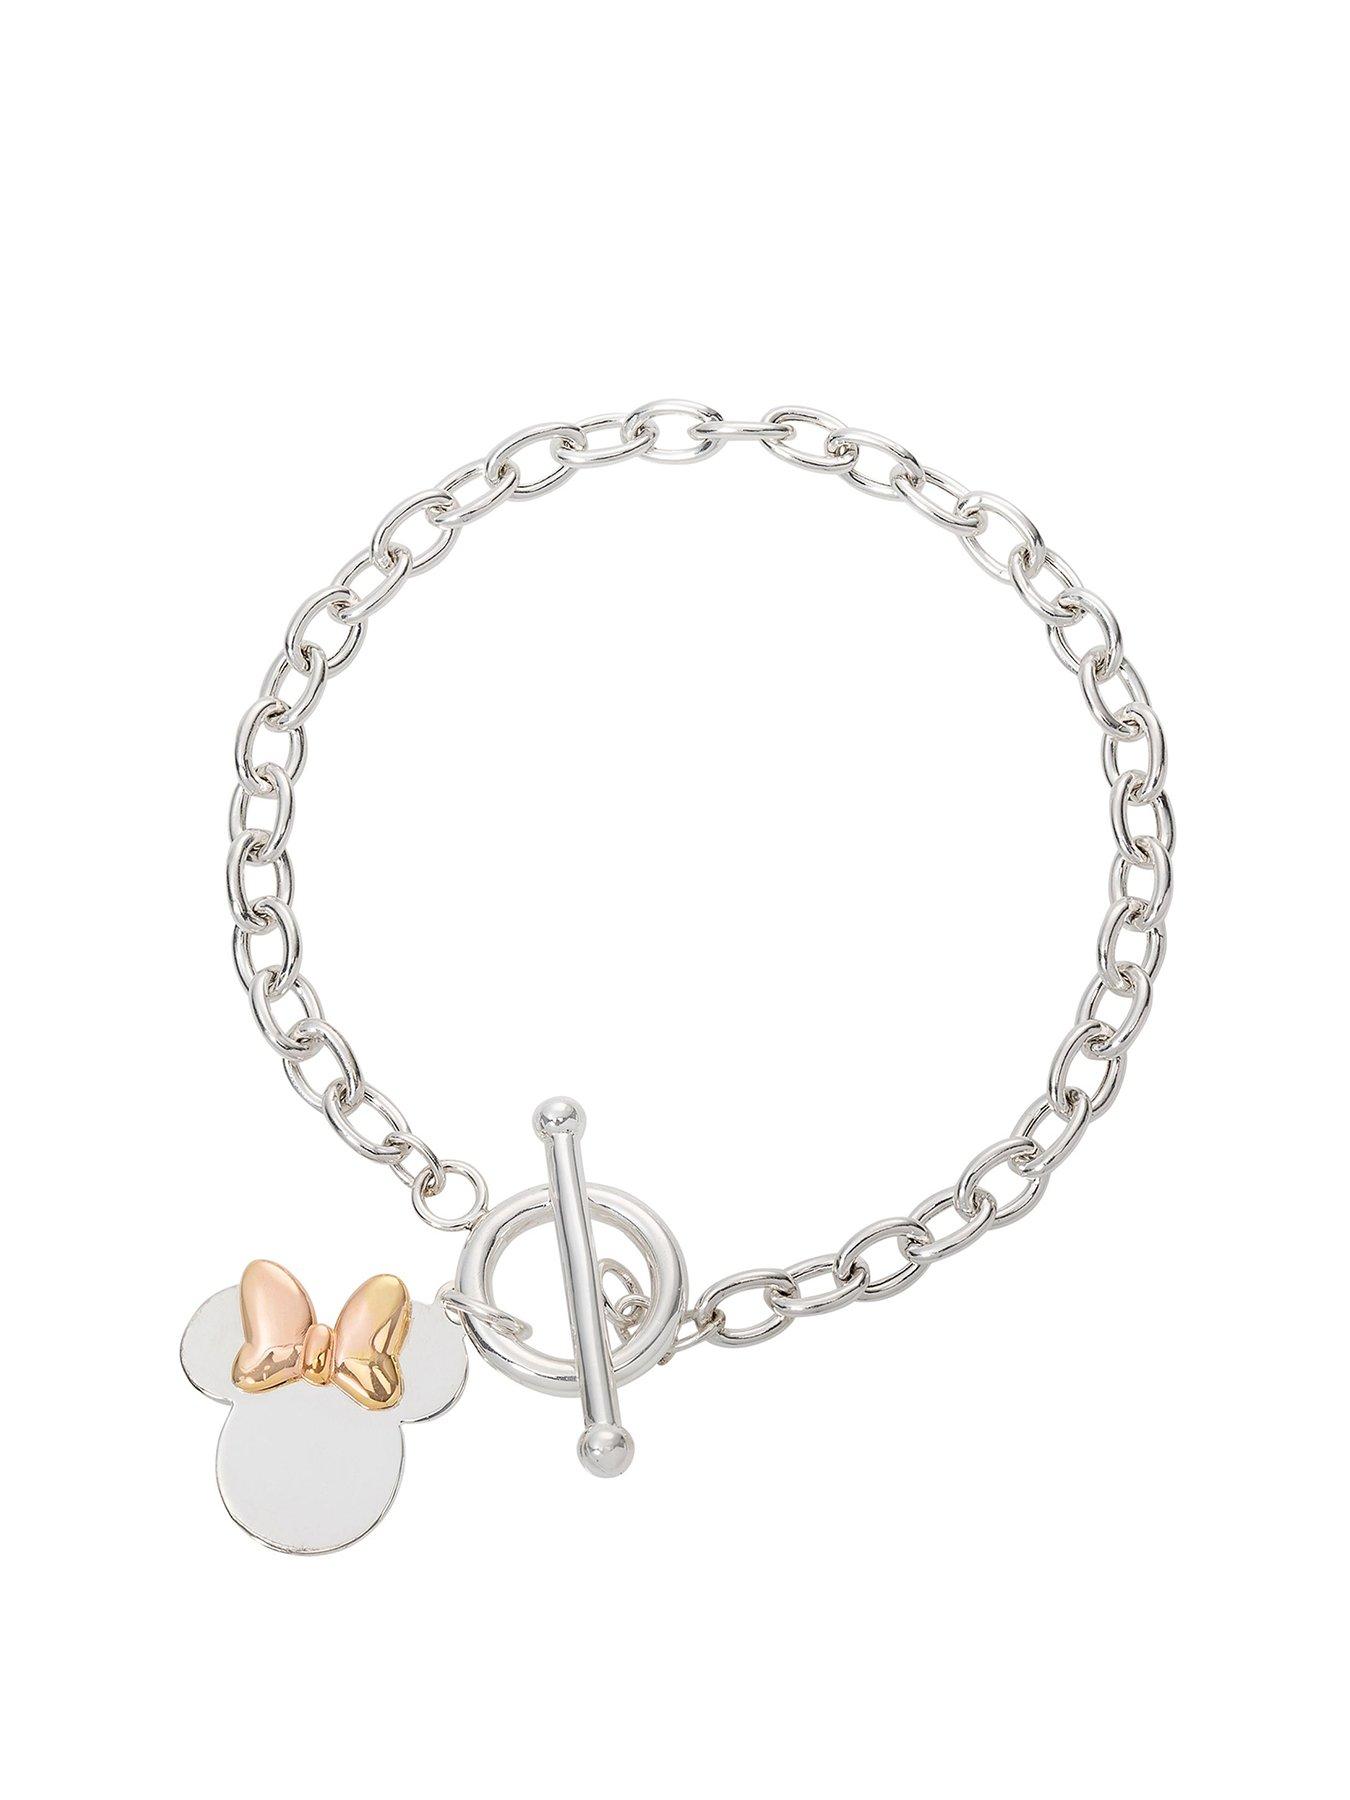 Disney Minnie Mouse Apple AirTag Wristband Silicone Airtag Bracelet for  Kids Purple